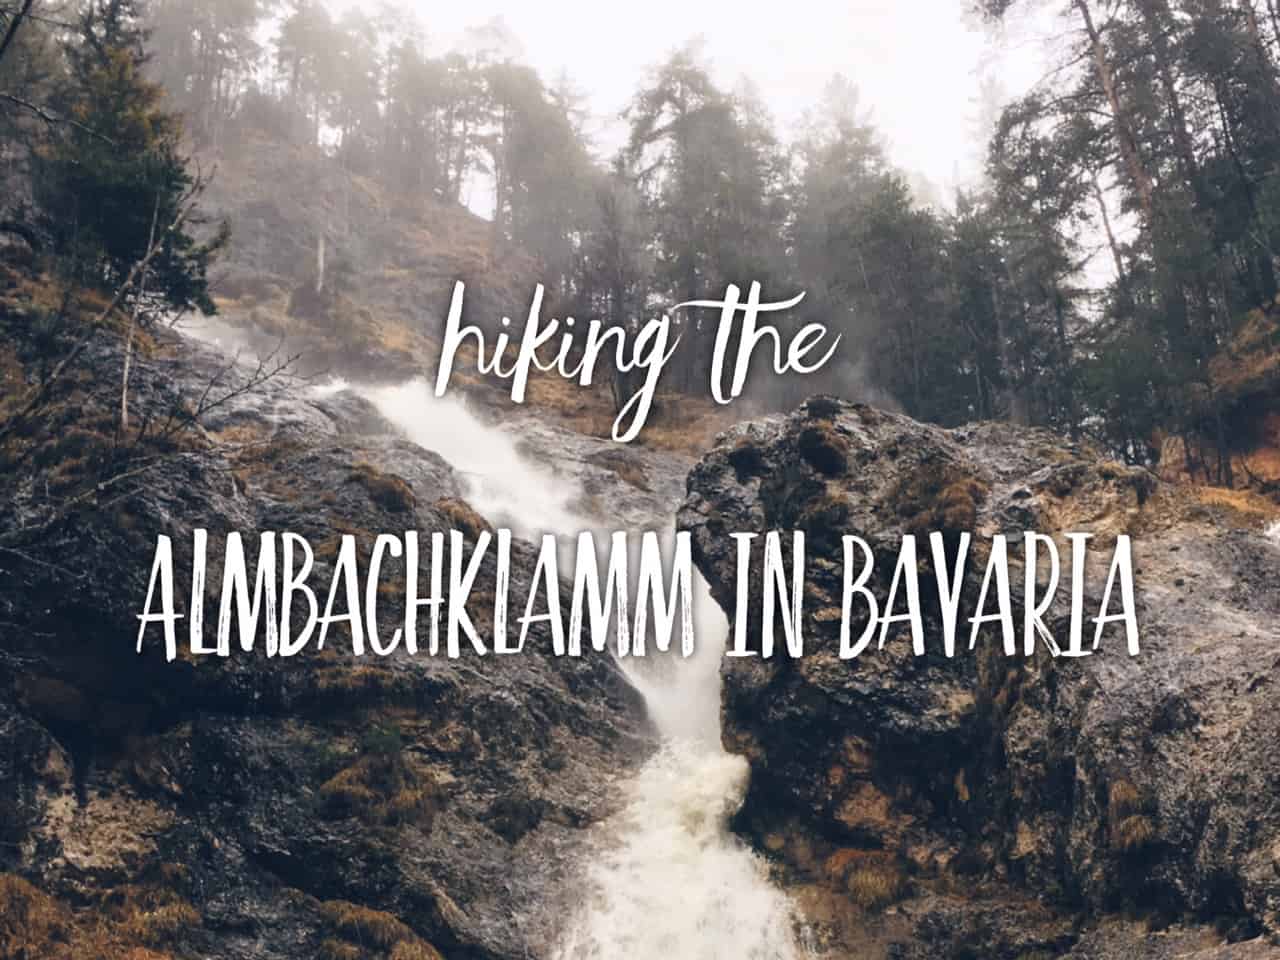 Hiking the Almbachklamm